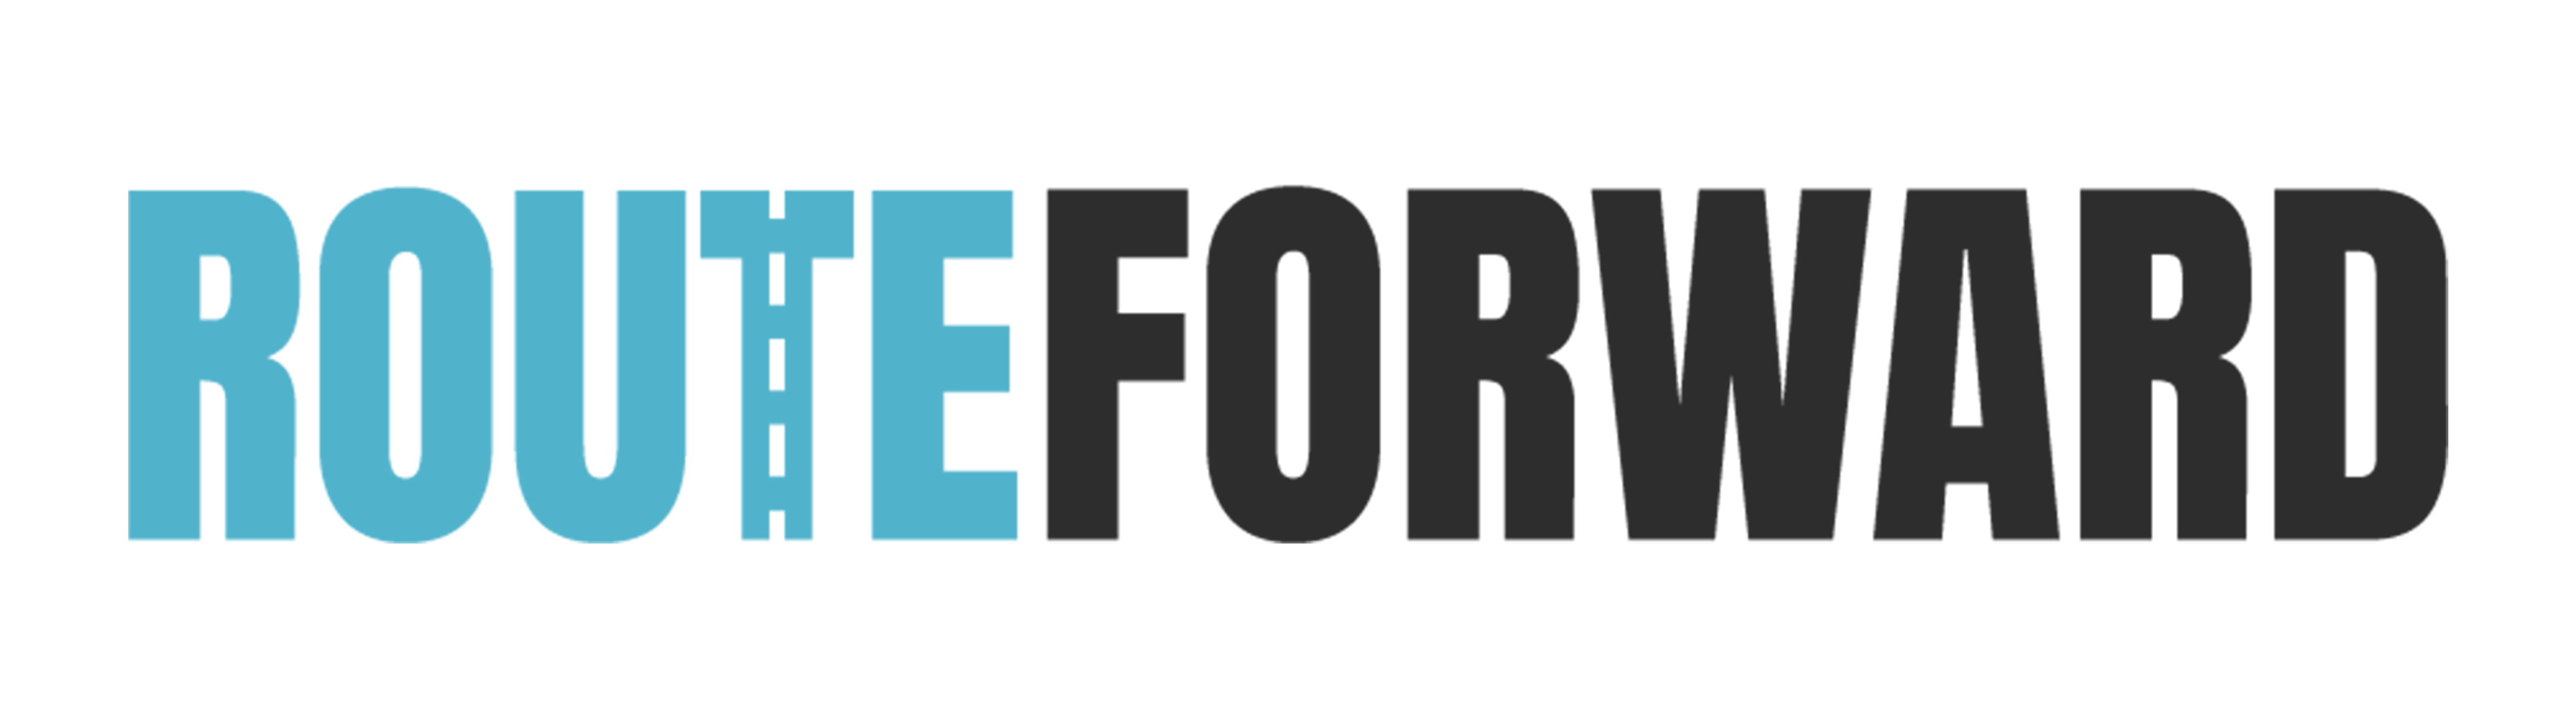 Route Forward logo